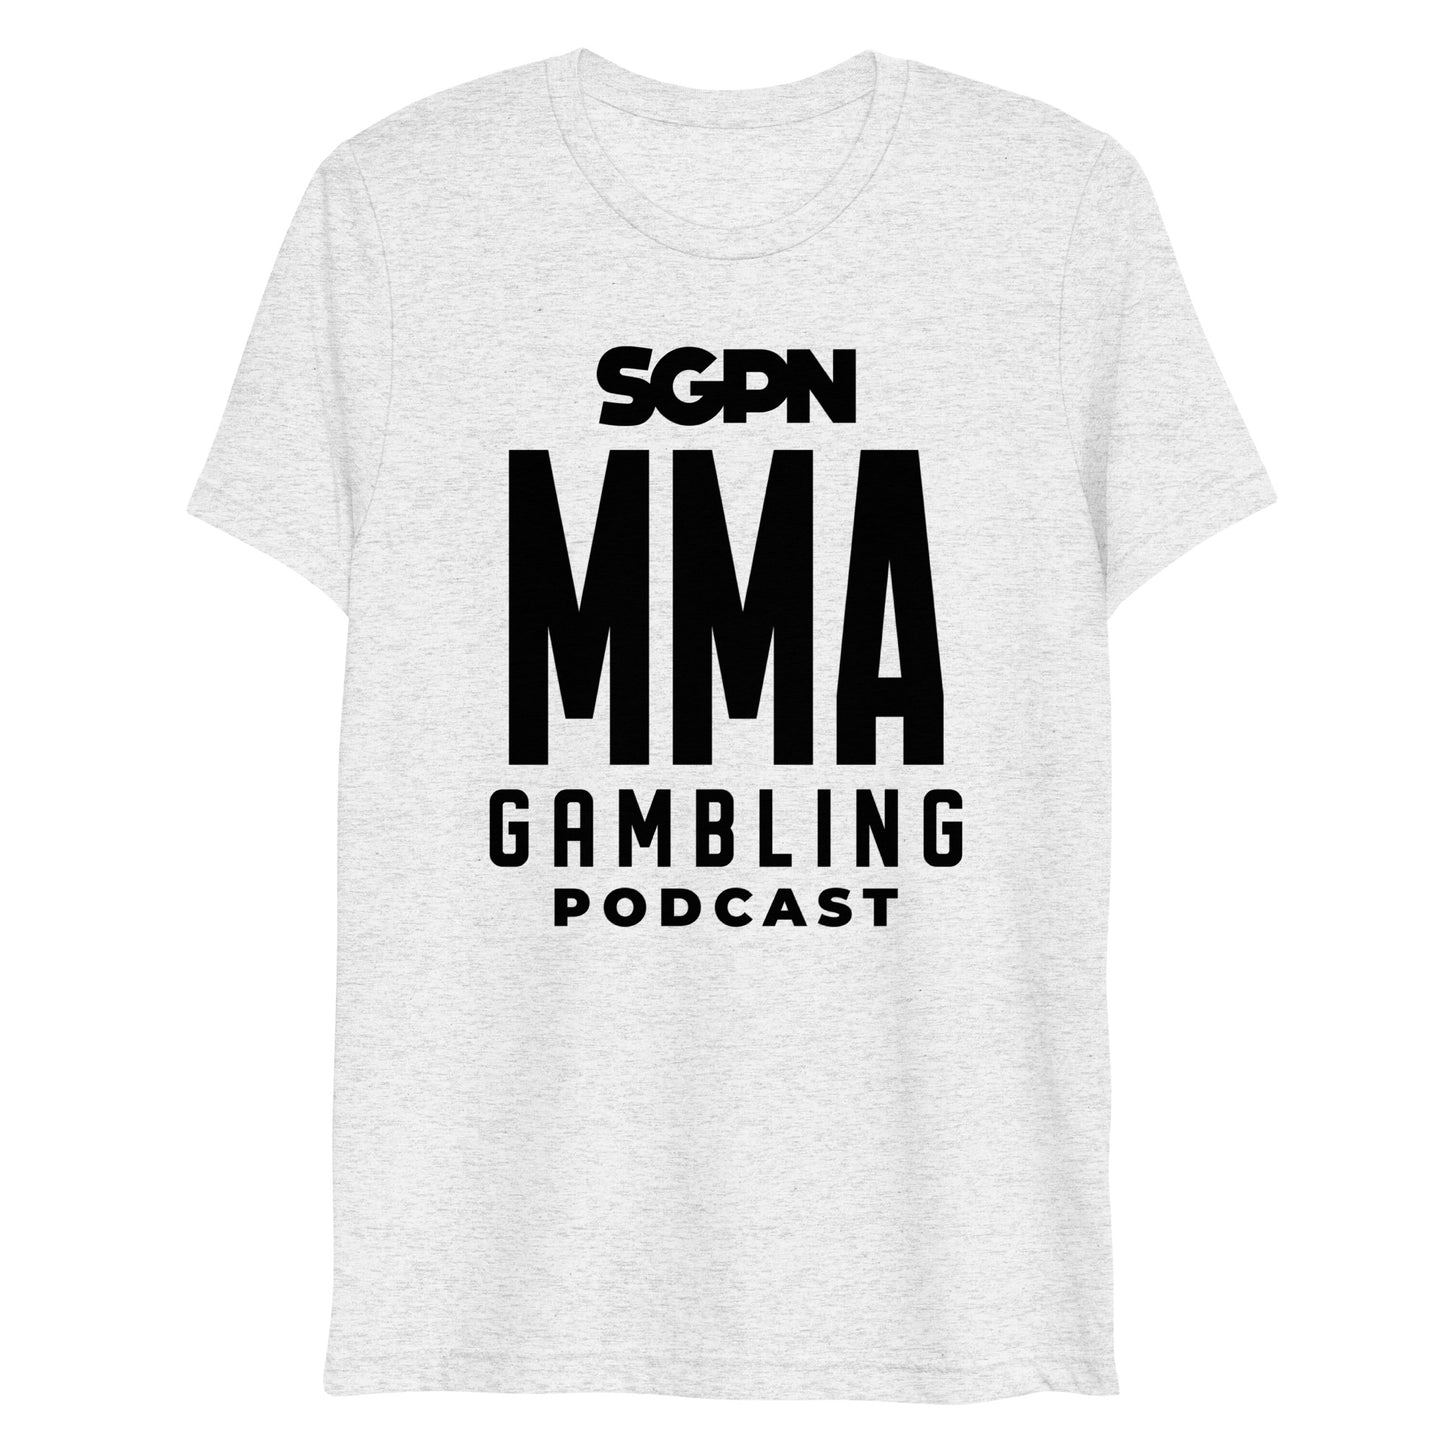 MMA Gambling Podcast Short sleeve t-shirt (Black Logo)